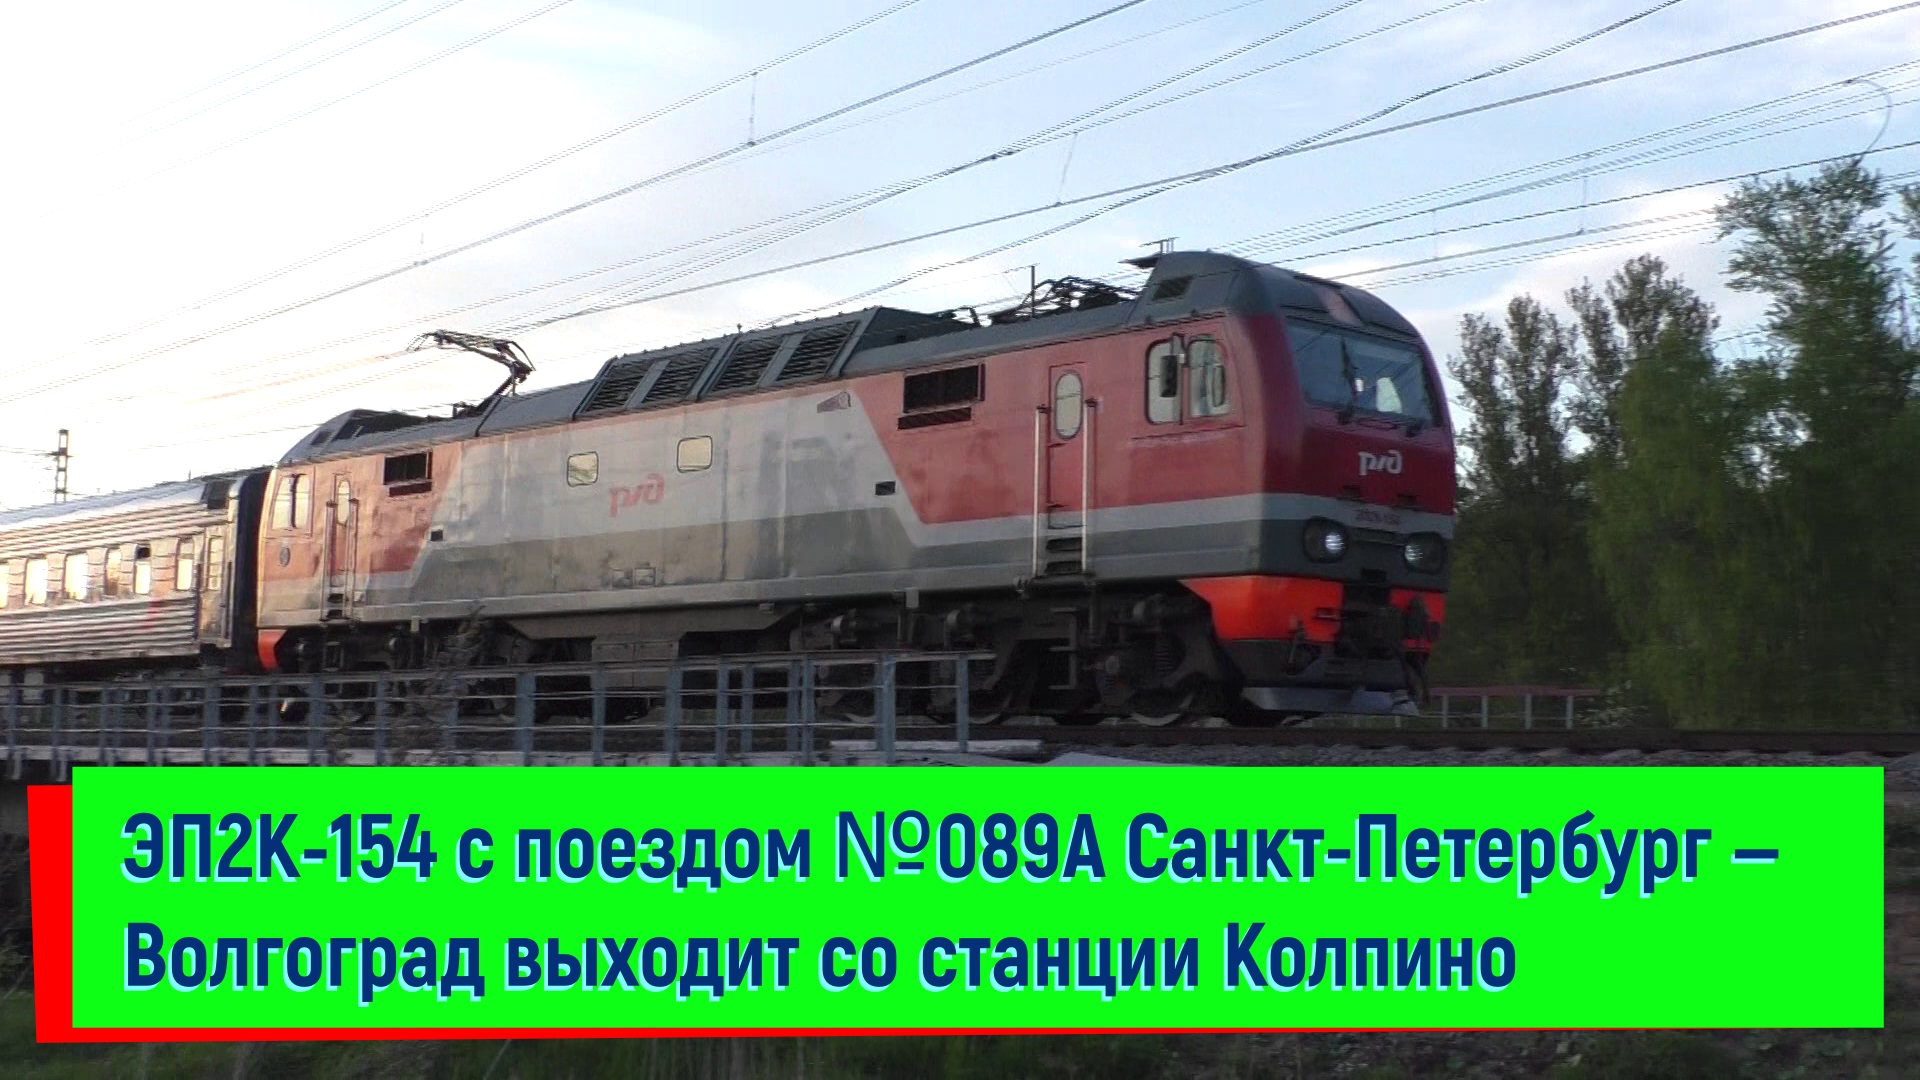 поезд 081а санкт петербург белгород